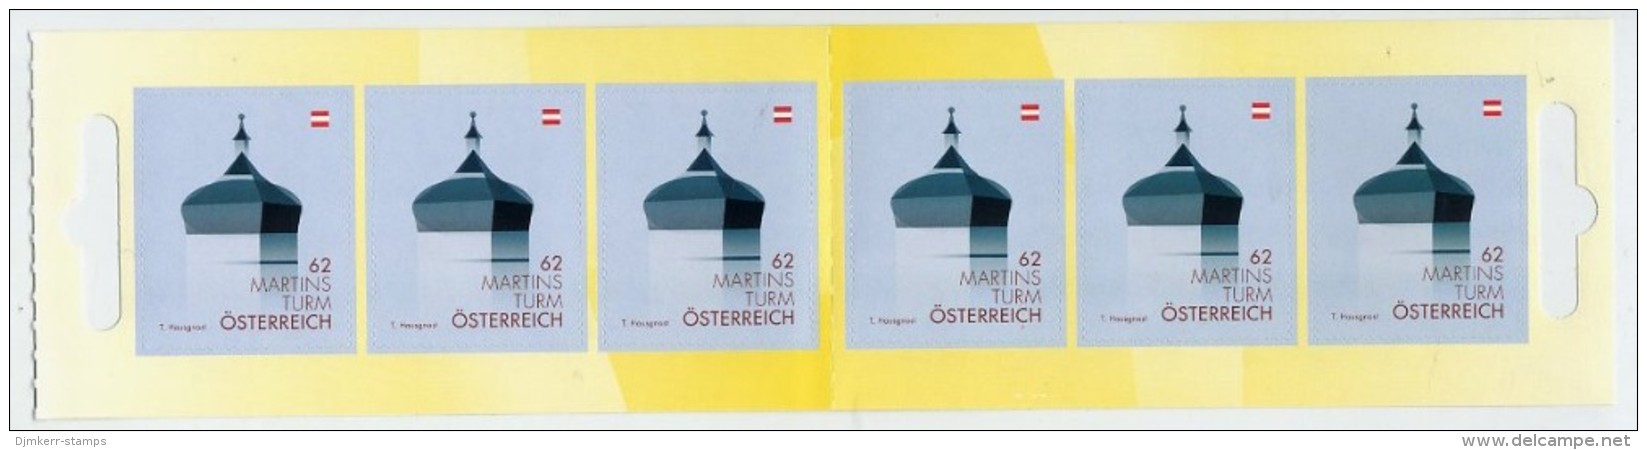 AUSTRIA 2013 Landmarks  Definitive 62 C. (Martinsturm) Retail Pack With 10 Stamps.  Michel MH 0-22 (3093) - Unused Stamps